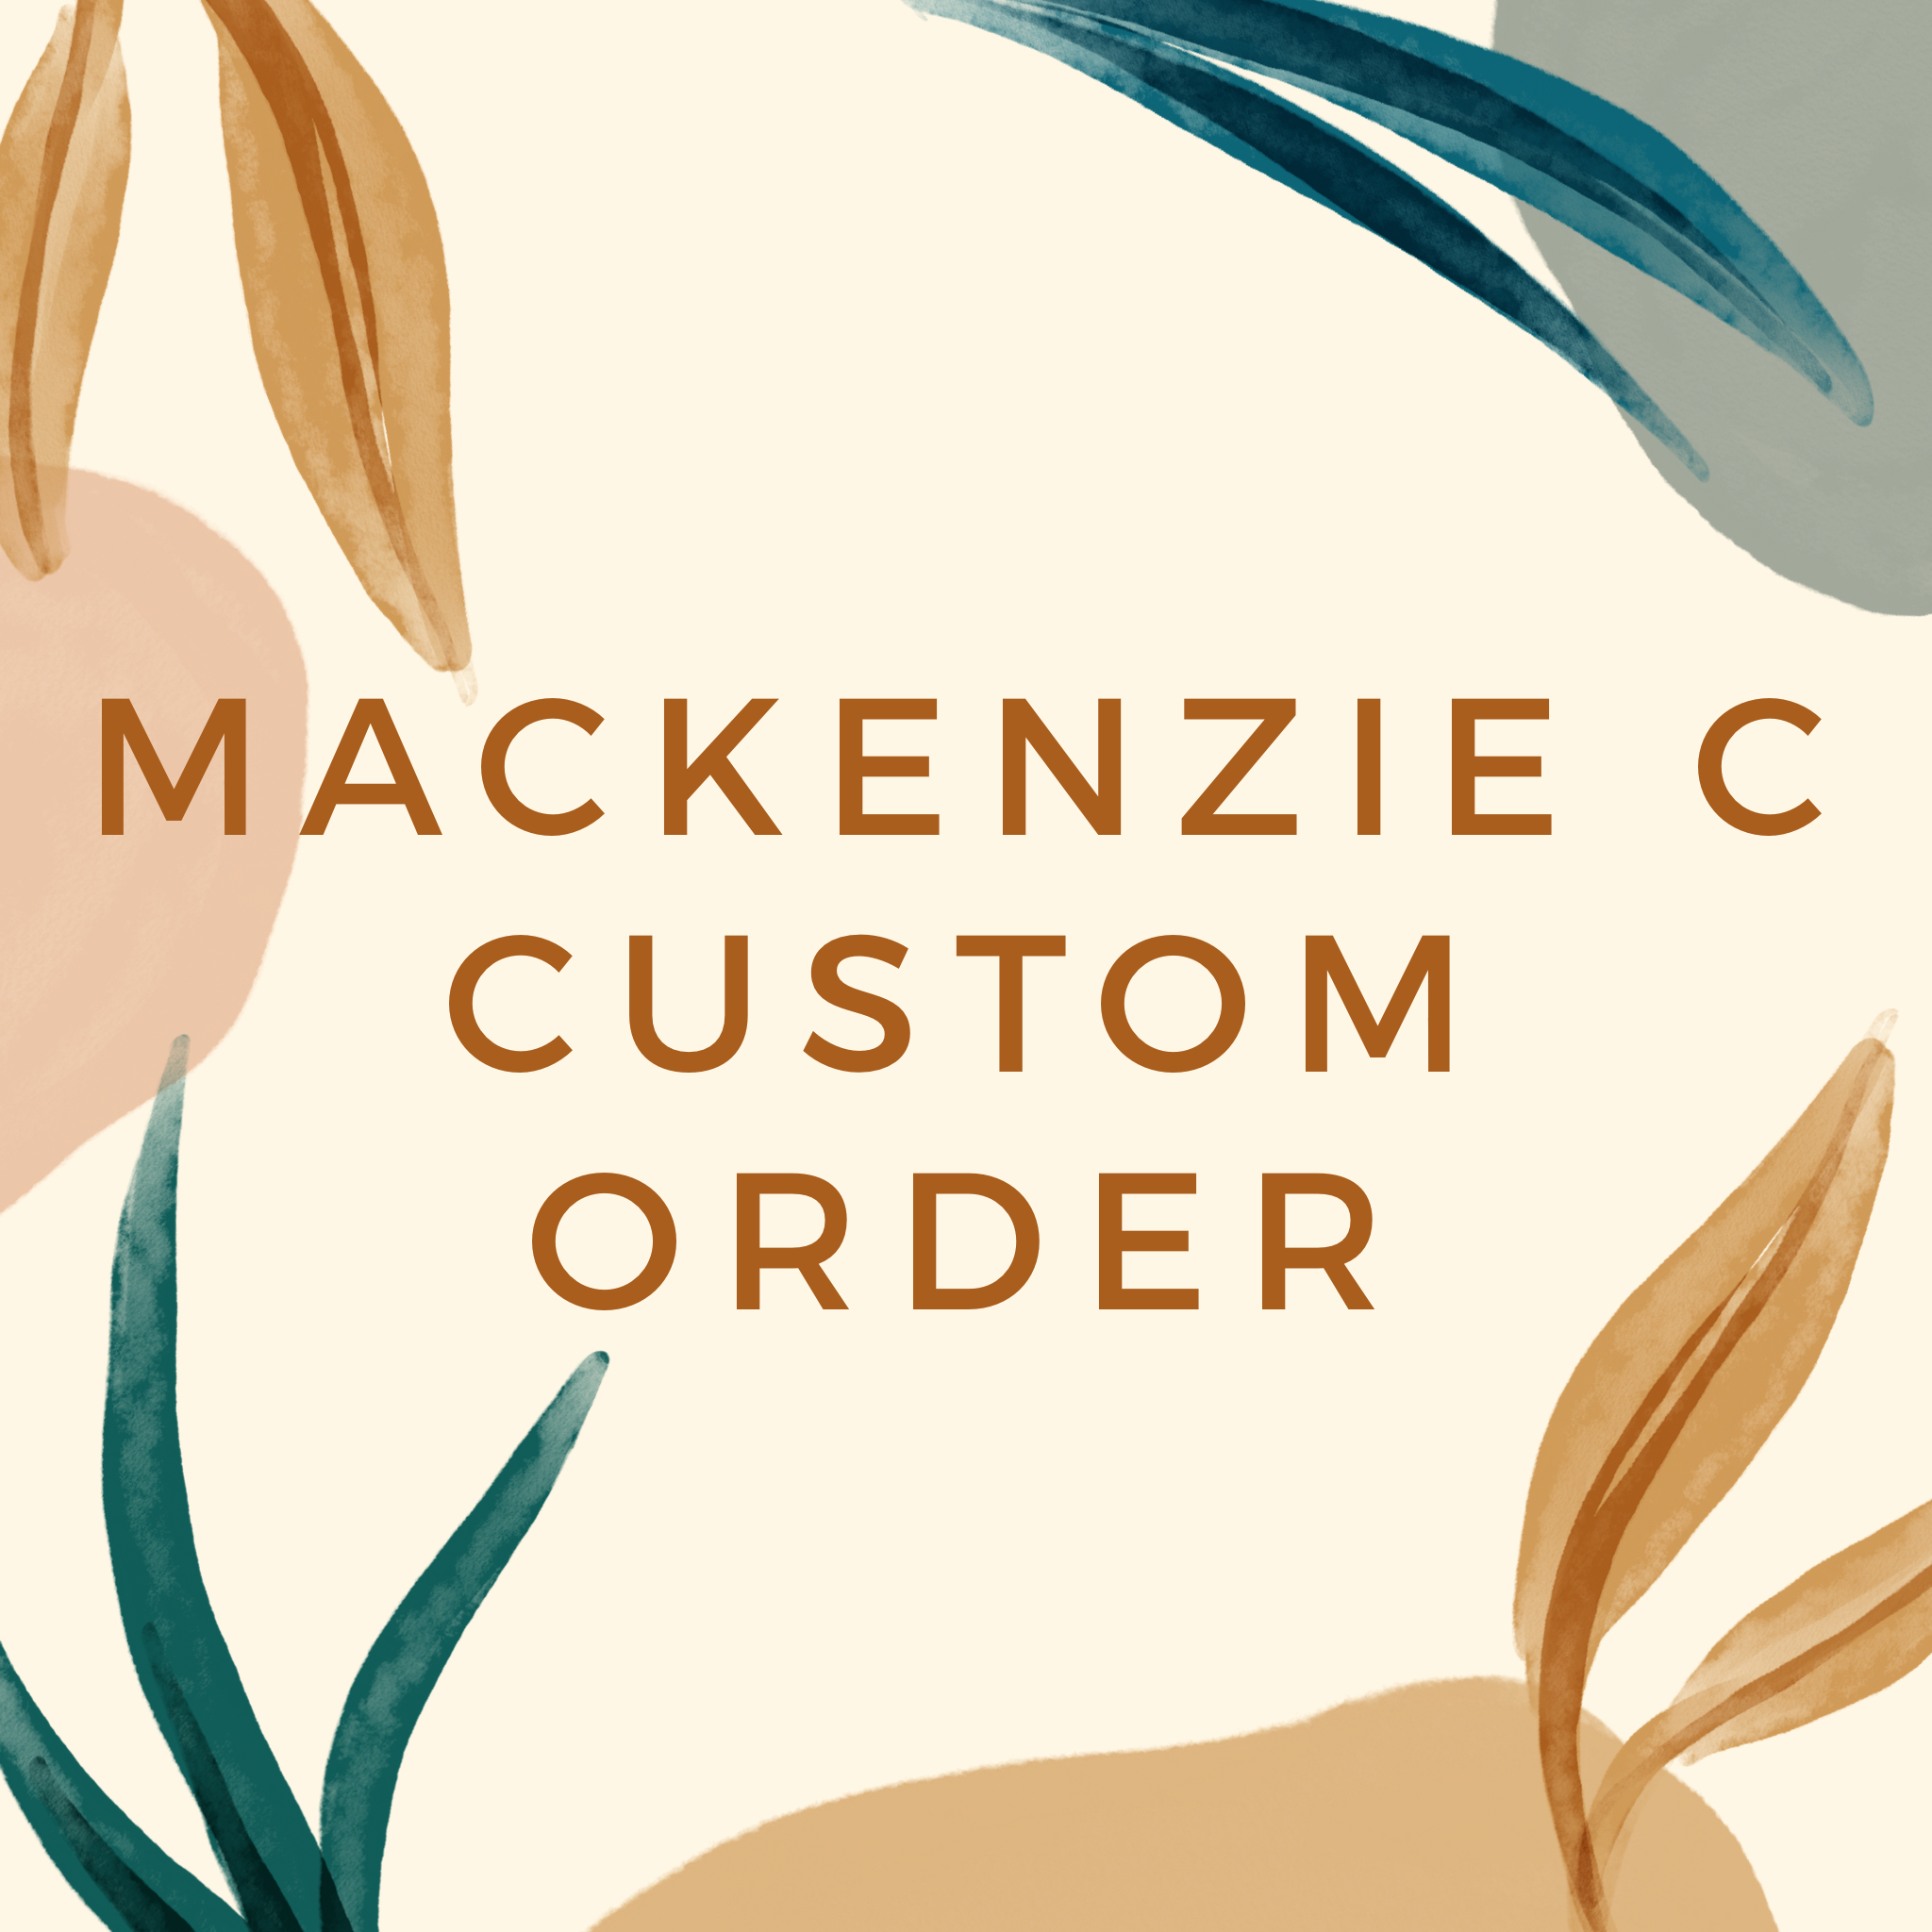 Mackenzie C Custom Order